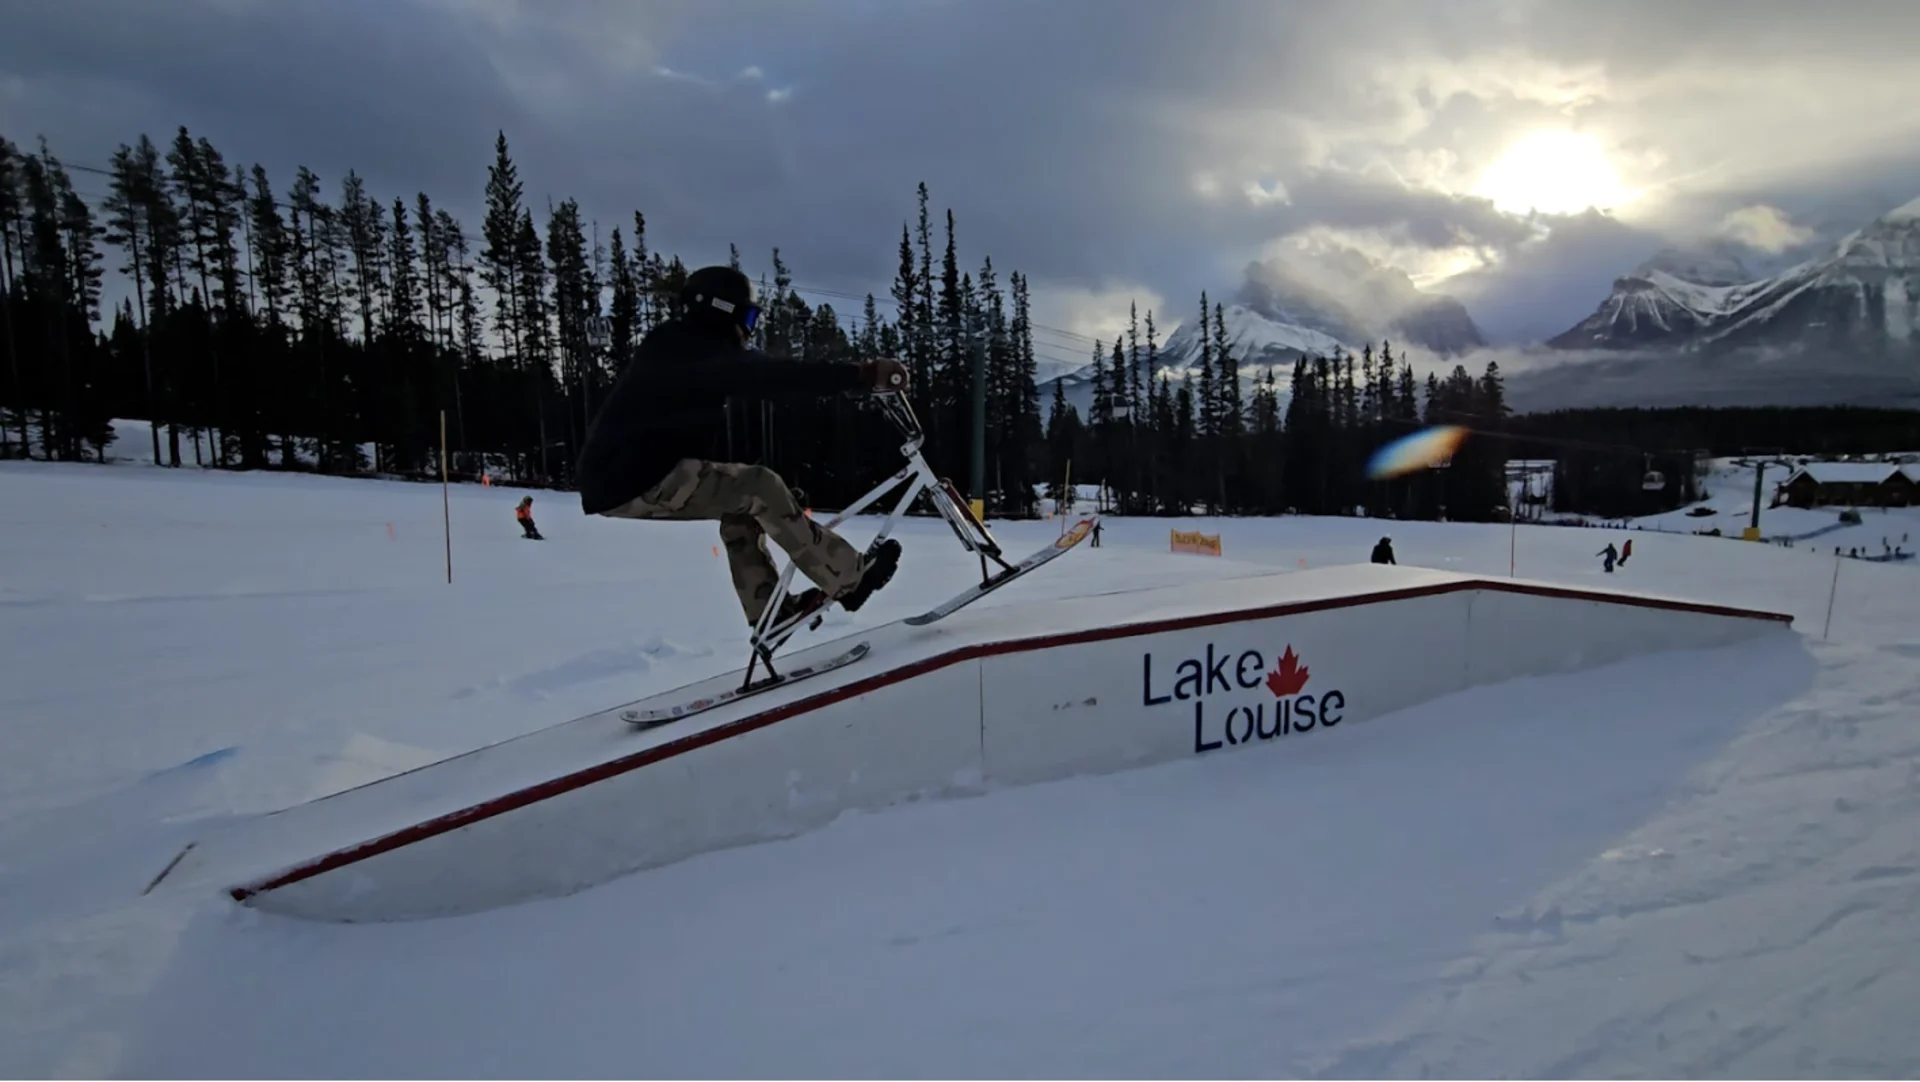 Connor O’Donovan: Dustin Cyganik hits a park feature at Lake Louise. 